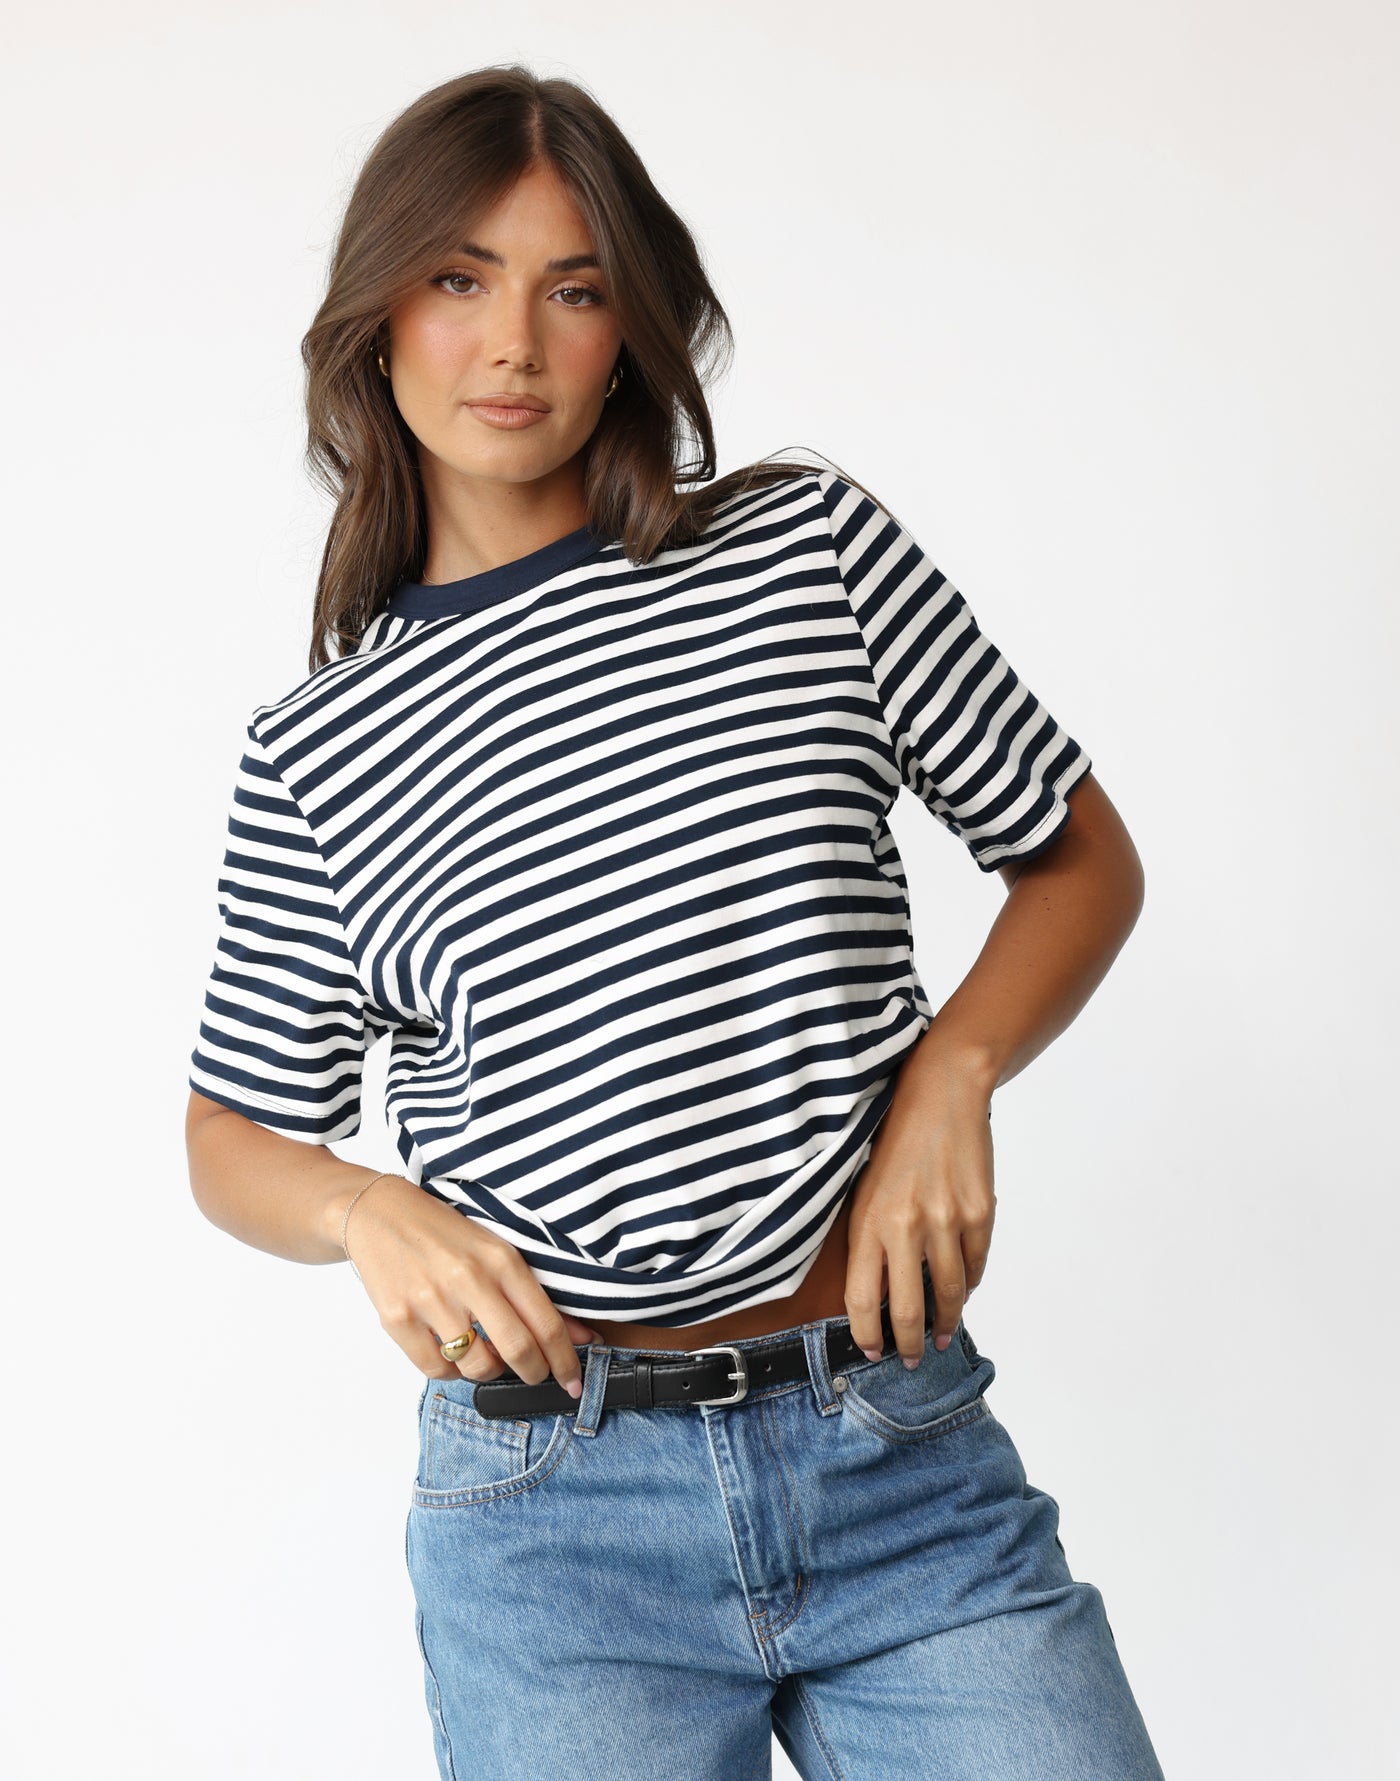 Ellyse T-Shirt (Navy/White Stripe) - - Women's Top - Charcoal Clothing